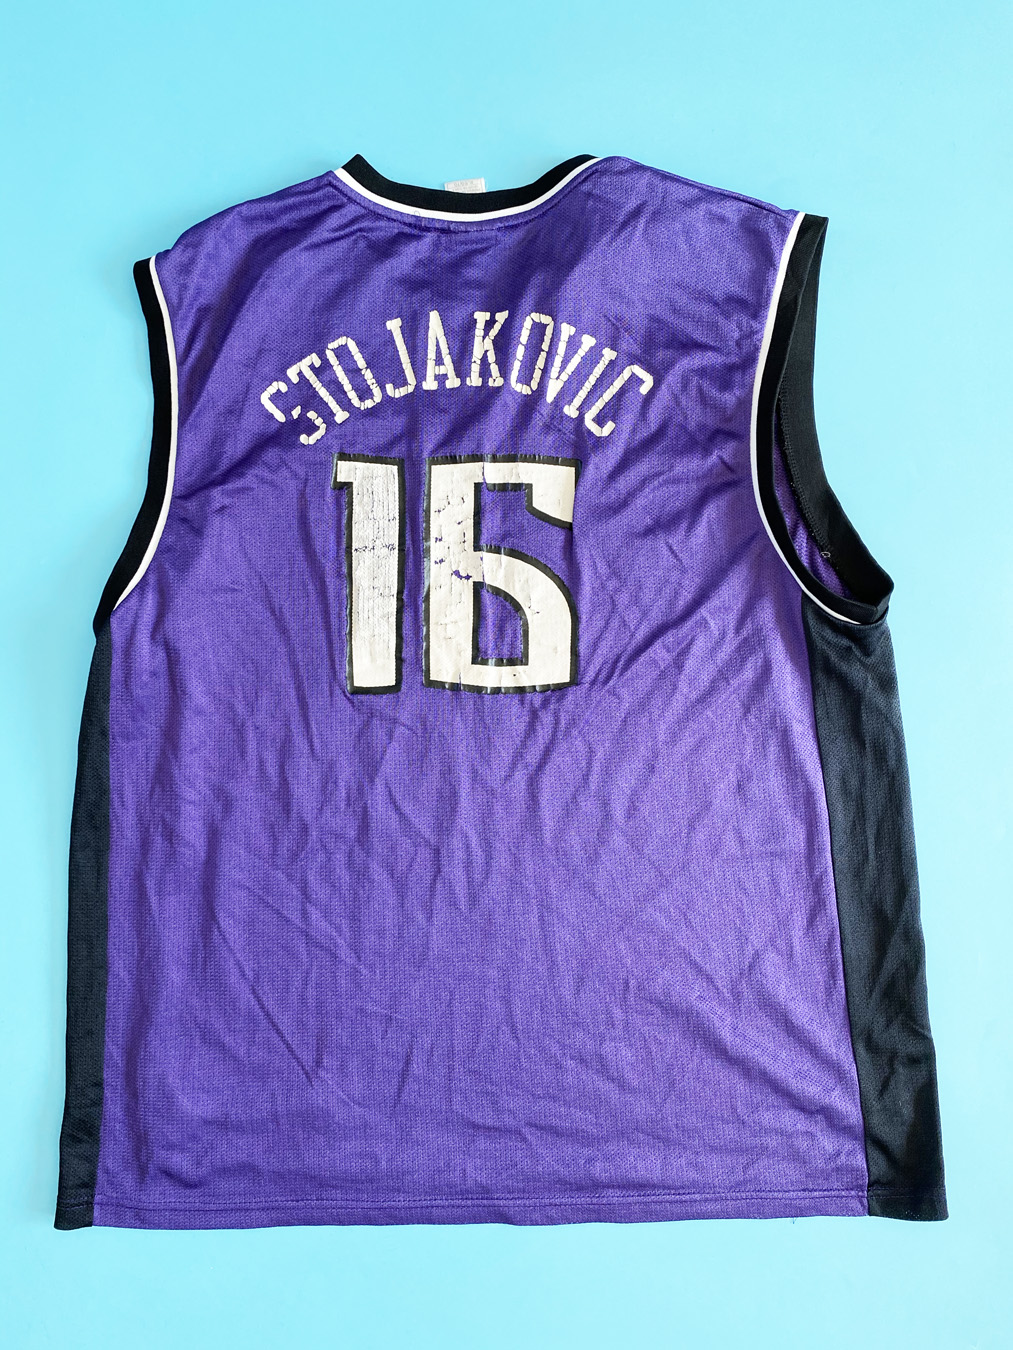 Reebok, Shirts, Peja Stojakovic Sacramento Kings Jersey